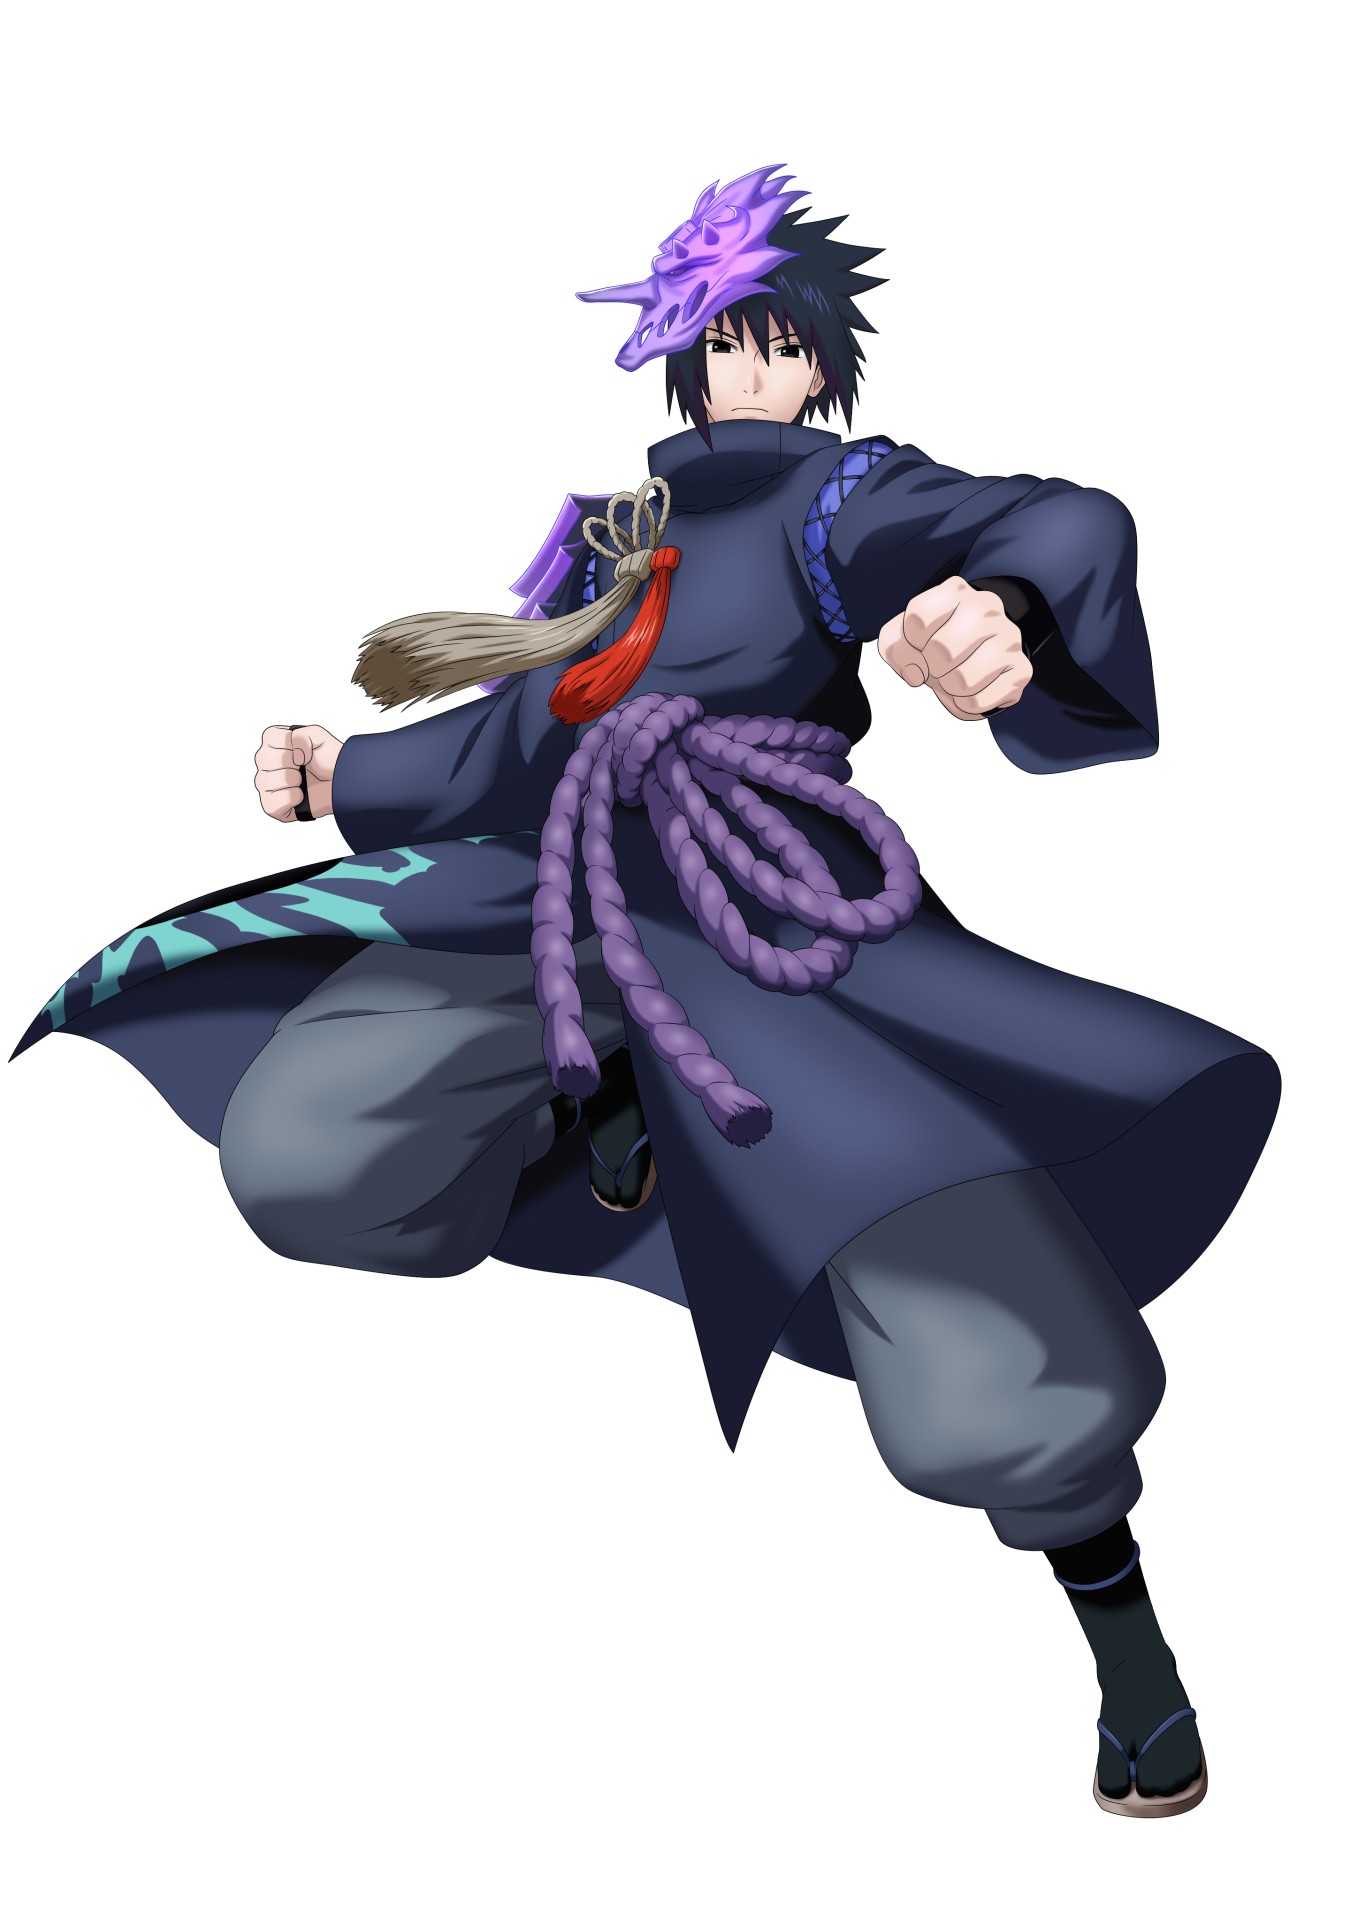 sasuke outfit changes